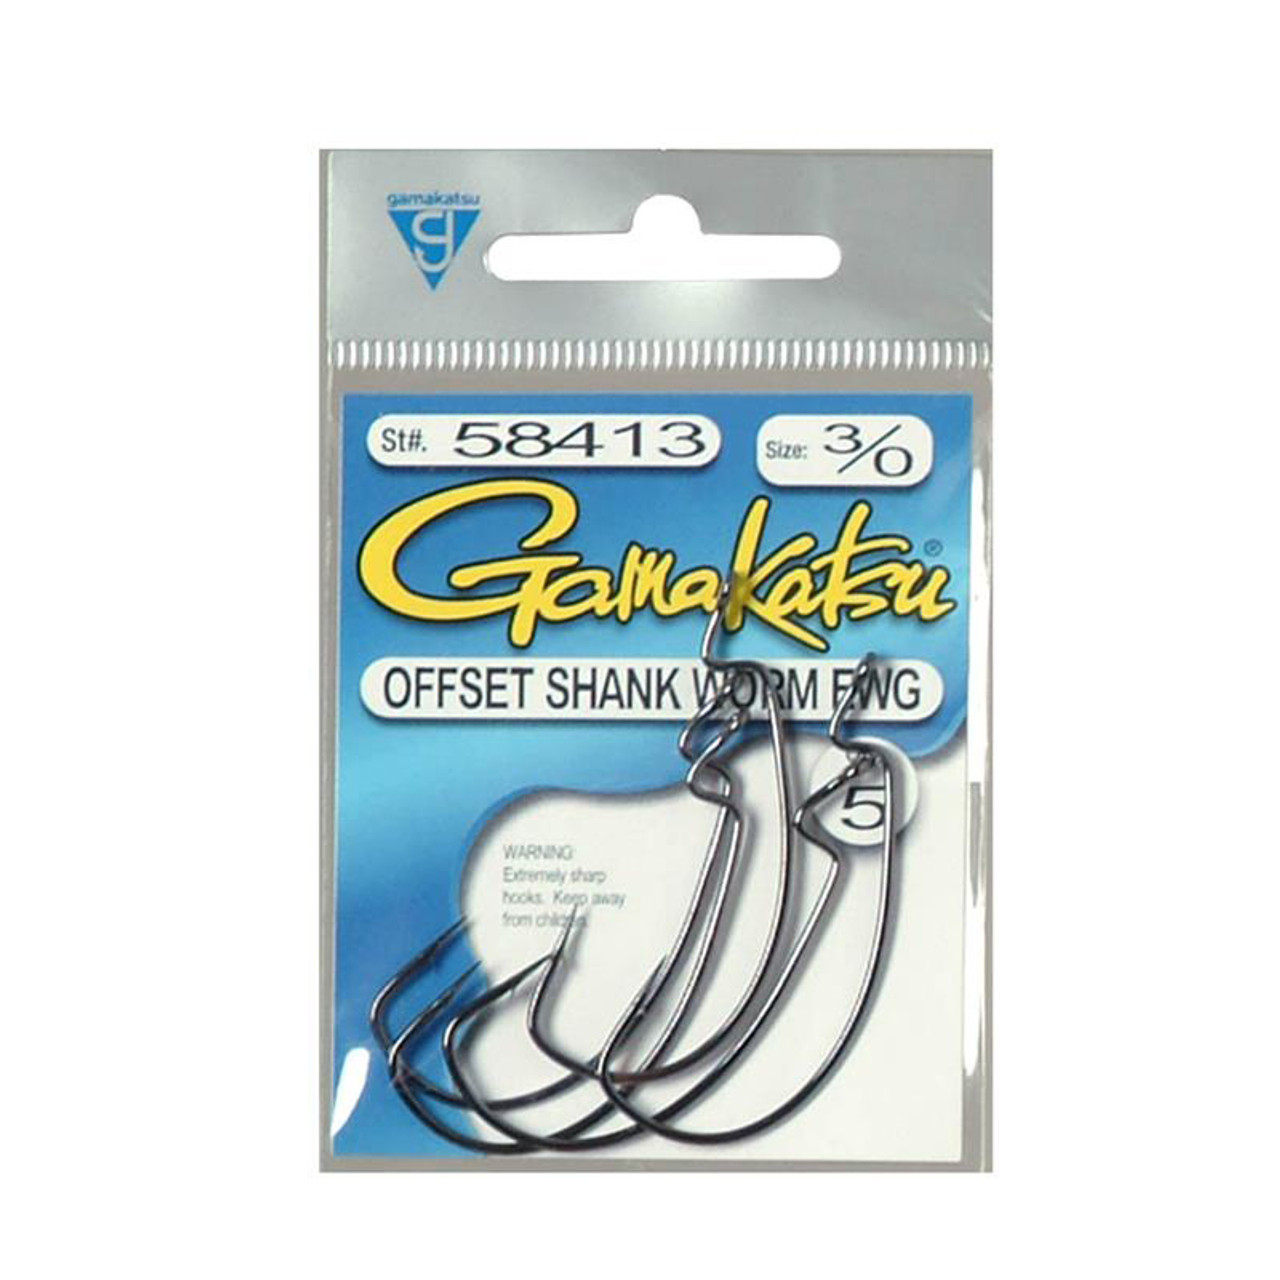 Gamakatsu EWG Shank Worm Hook NS Black - Size 3 0